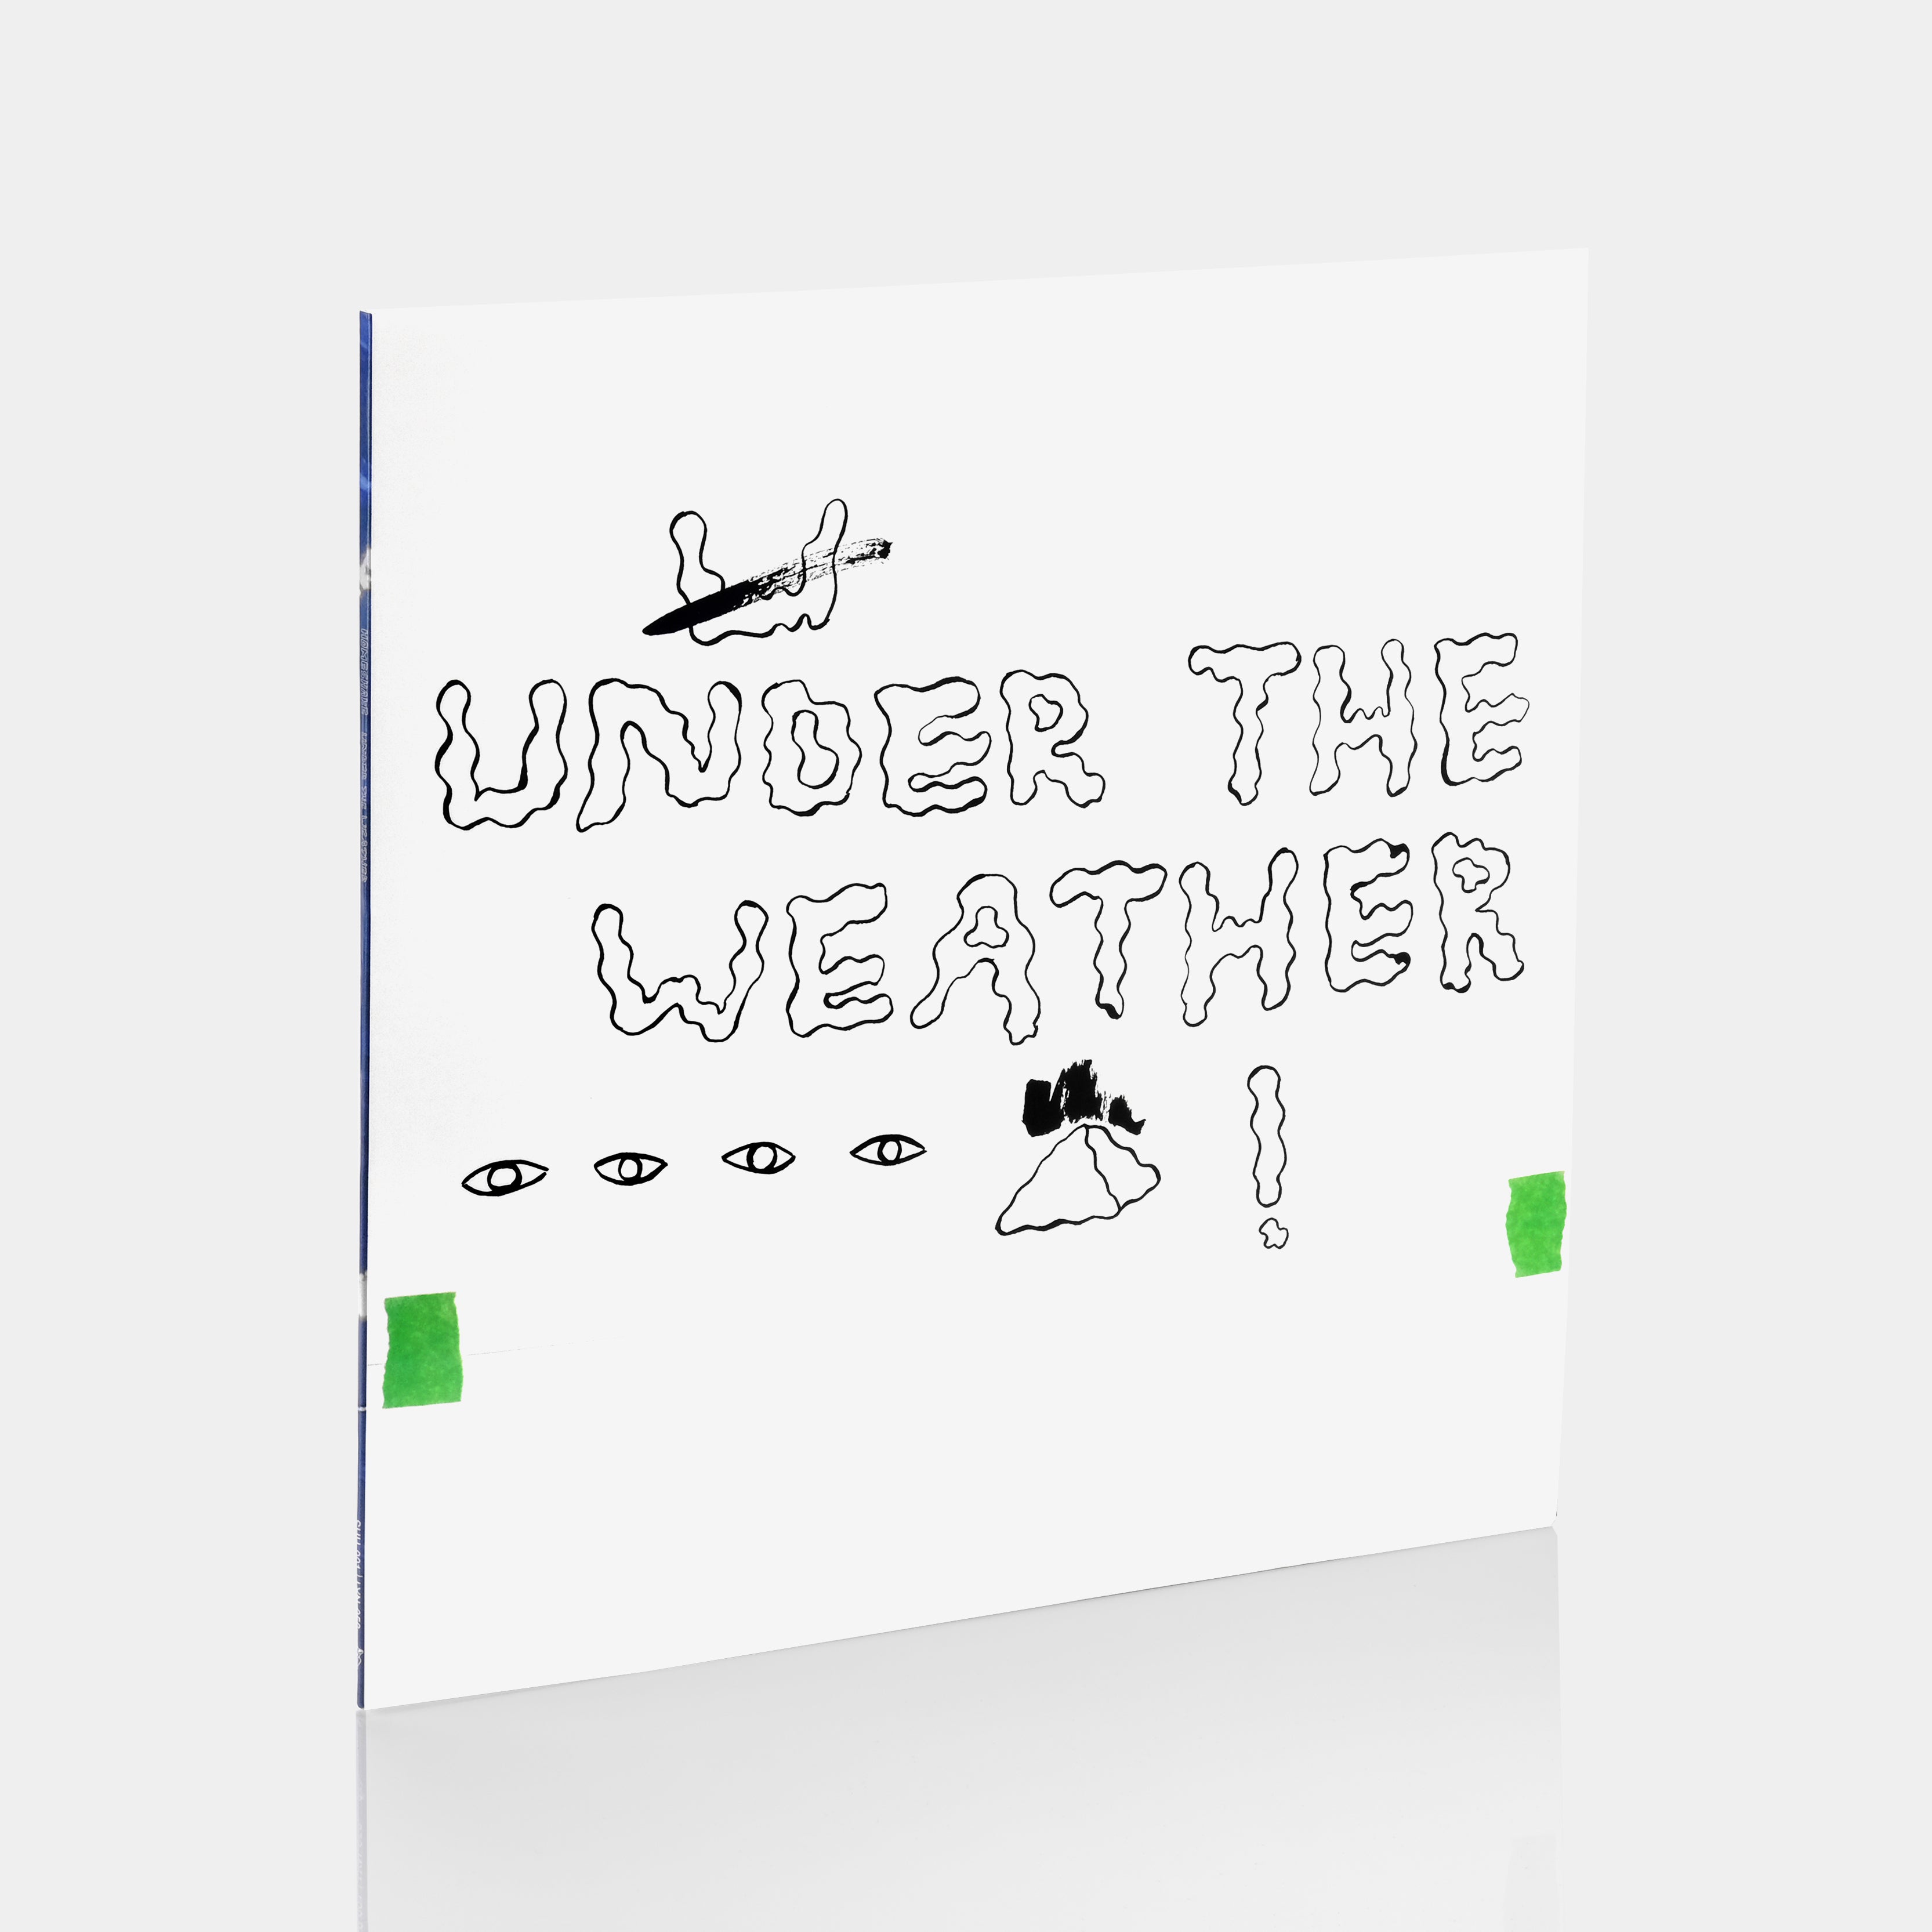 Homeshake - Under The Weather LP Grey Vinyl Record